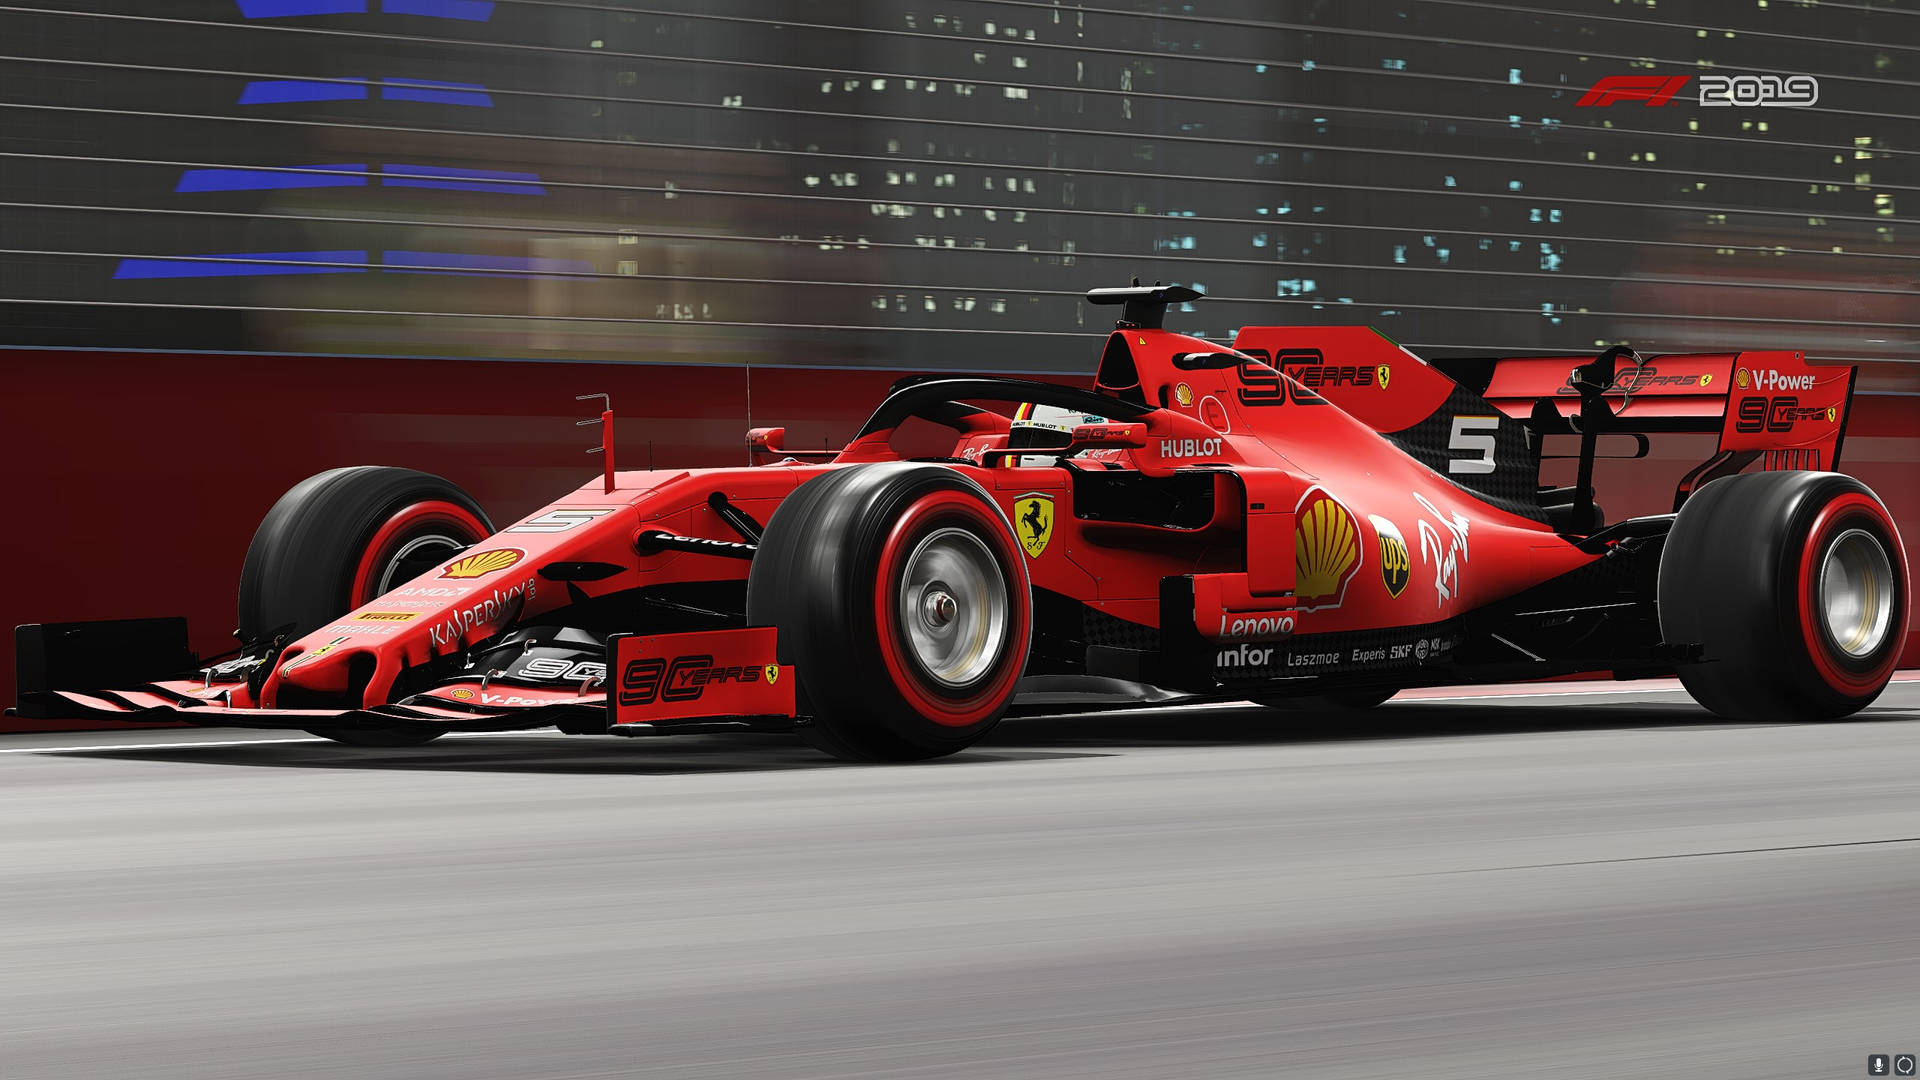 Ferrariin Der Formel 1 2019 Wallpaper